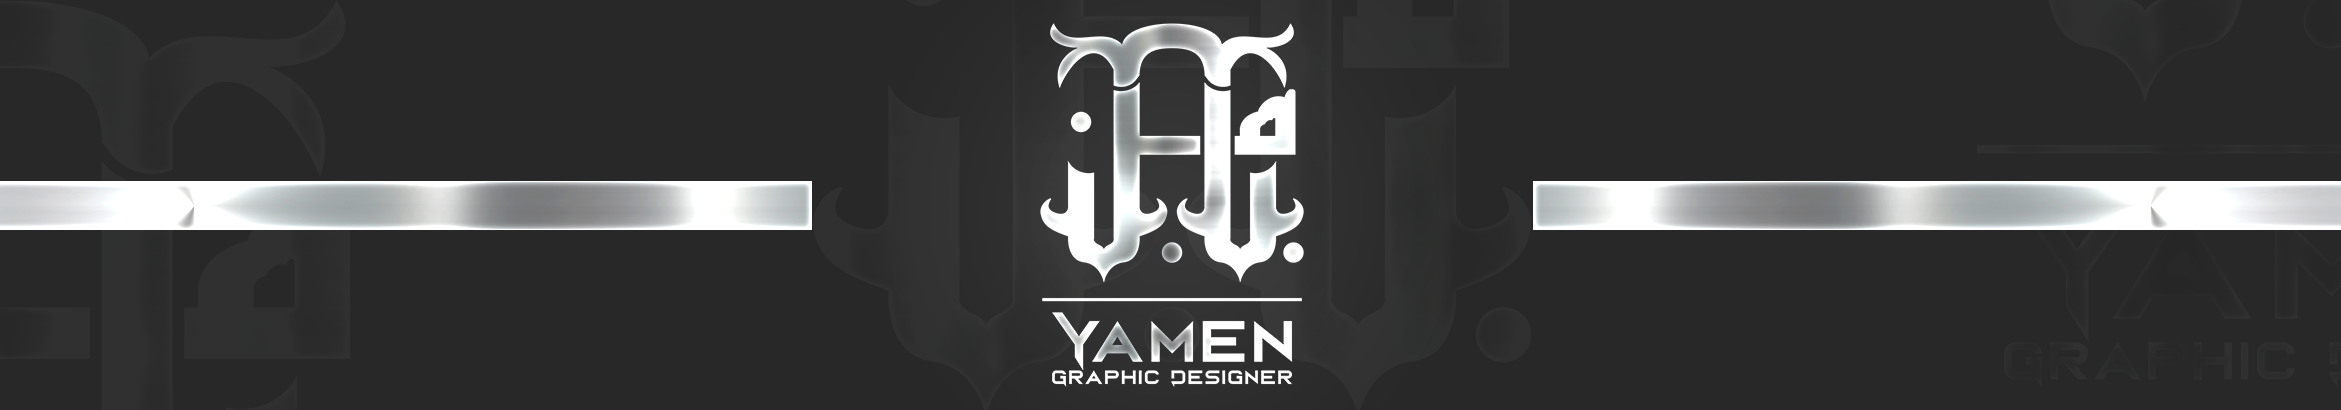 Bannière de profil de Yamen AL-Qadre